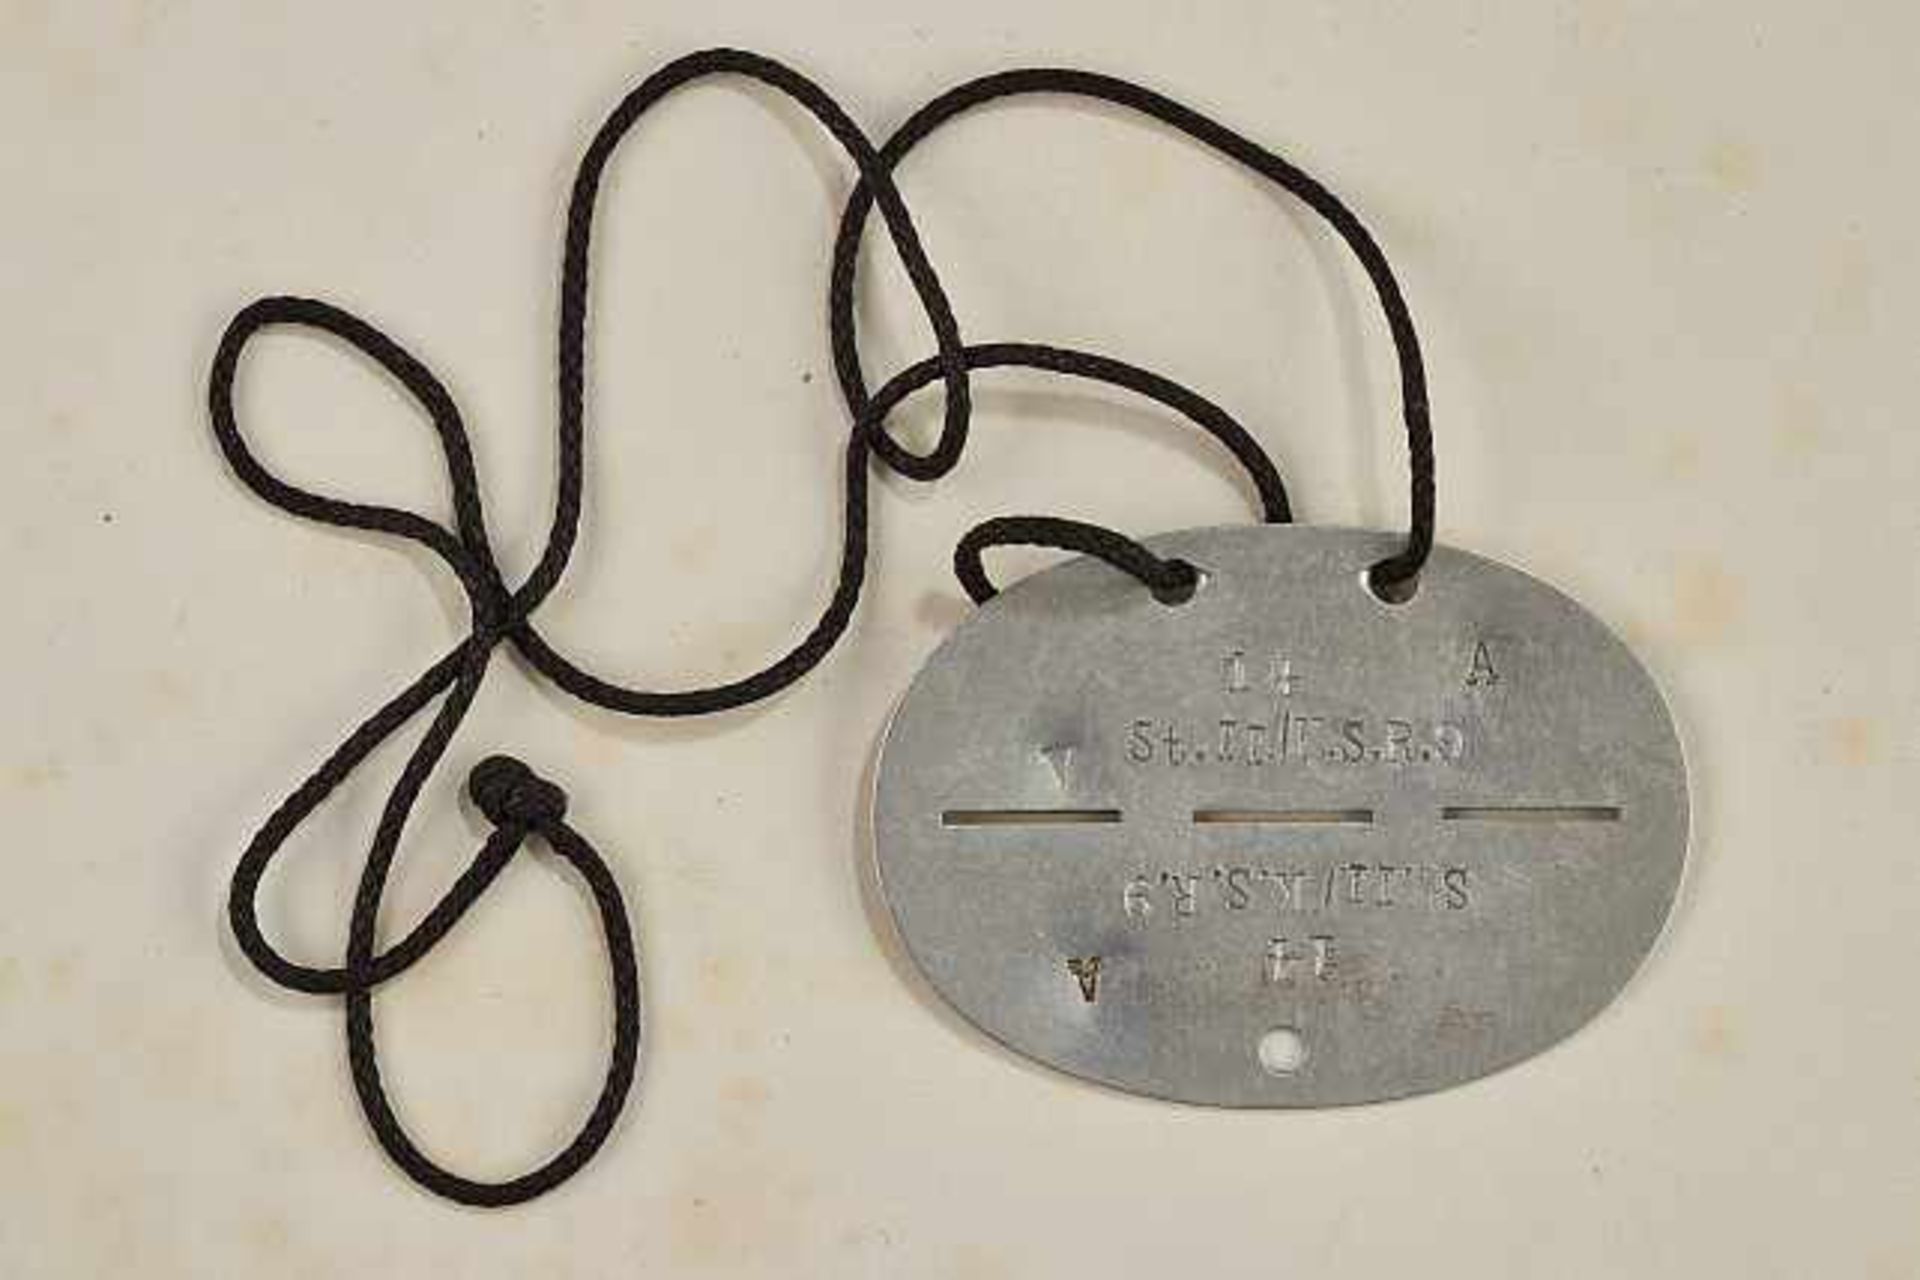 Deutsches Reich 1933 - 1945 - Heer : Identification Disc.Identification disc (Dog tag) for a soldier